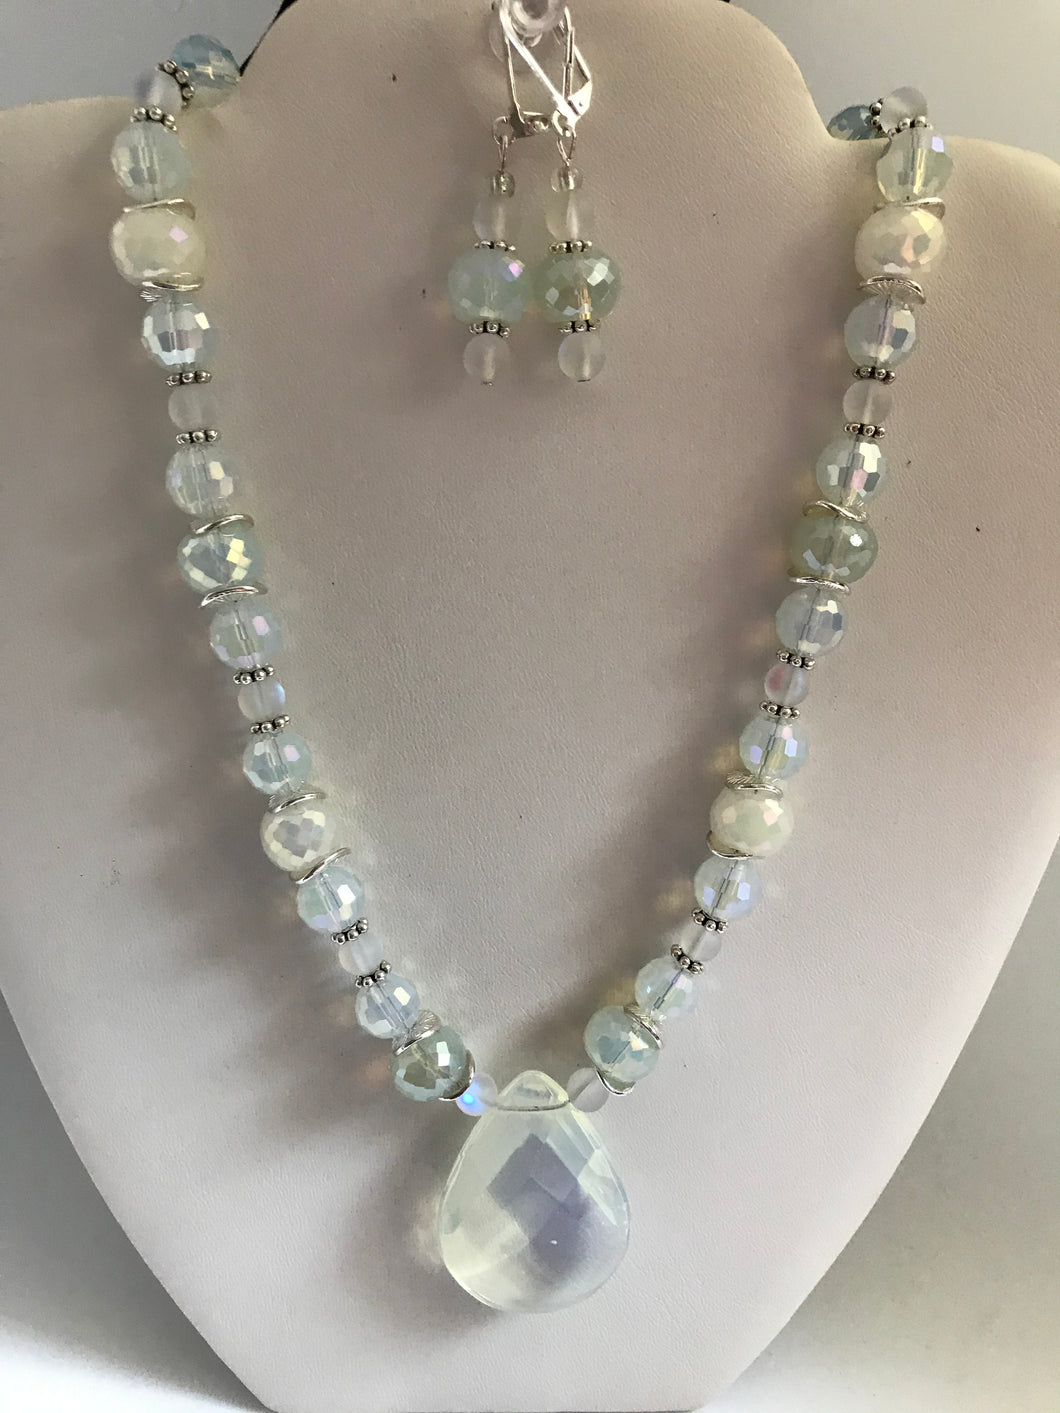 Moonstone teardrop focal pendant and opal beads